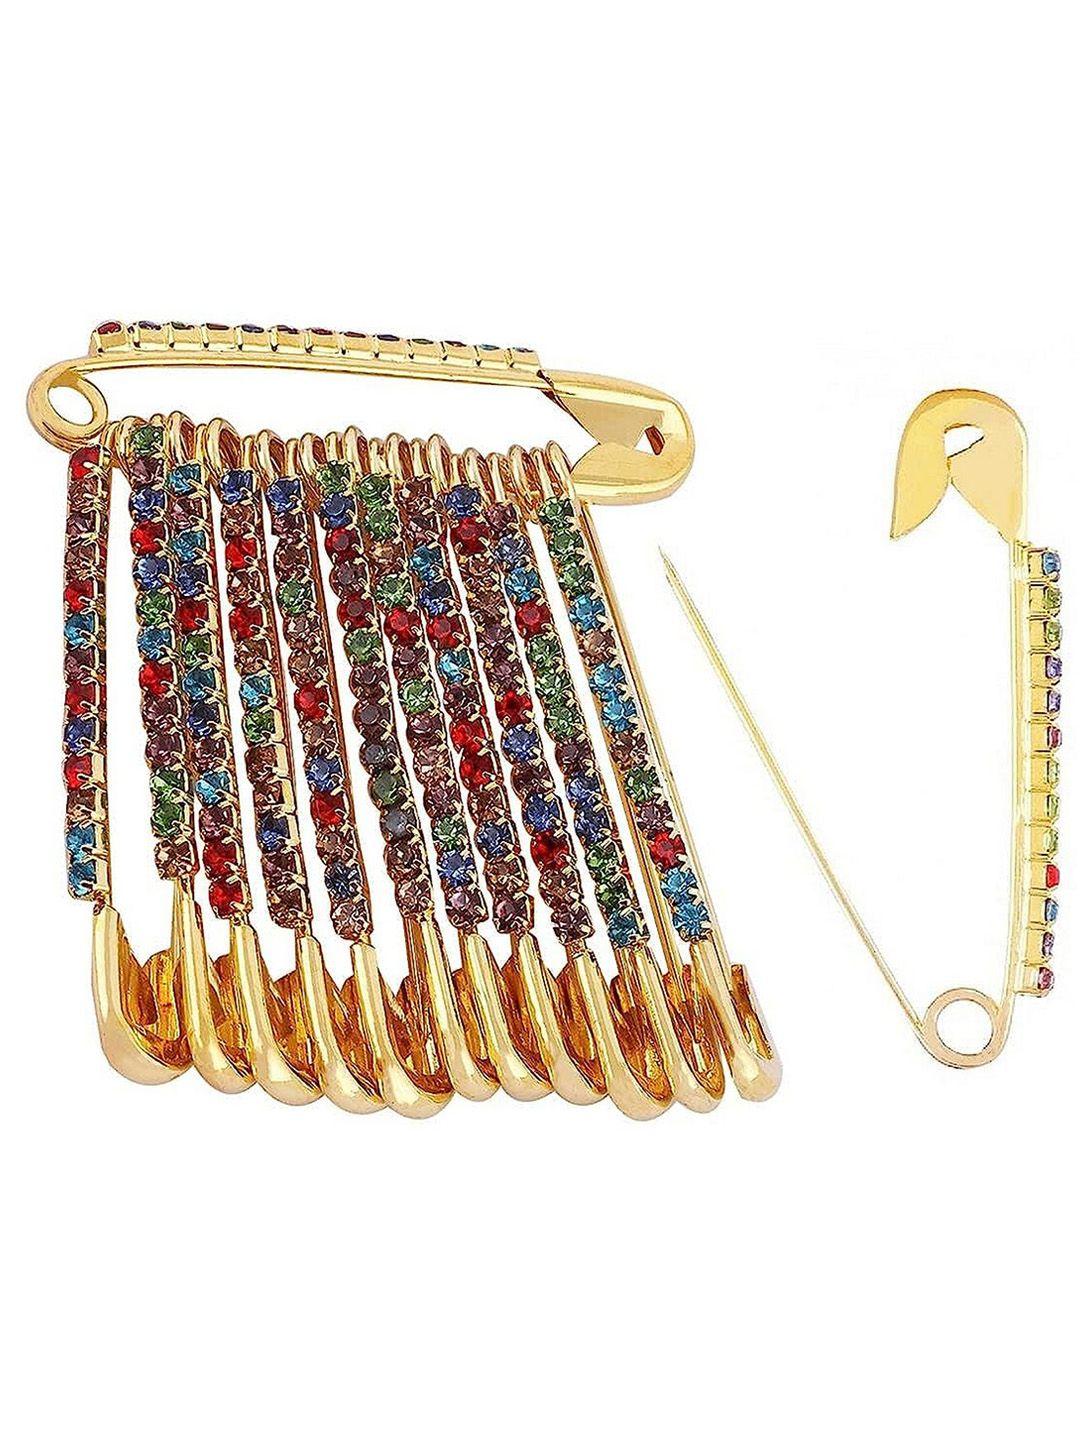 vama set of 12 gold-plated cz studded safety saree pins